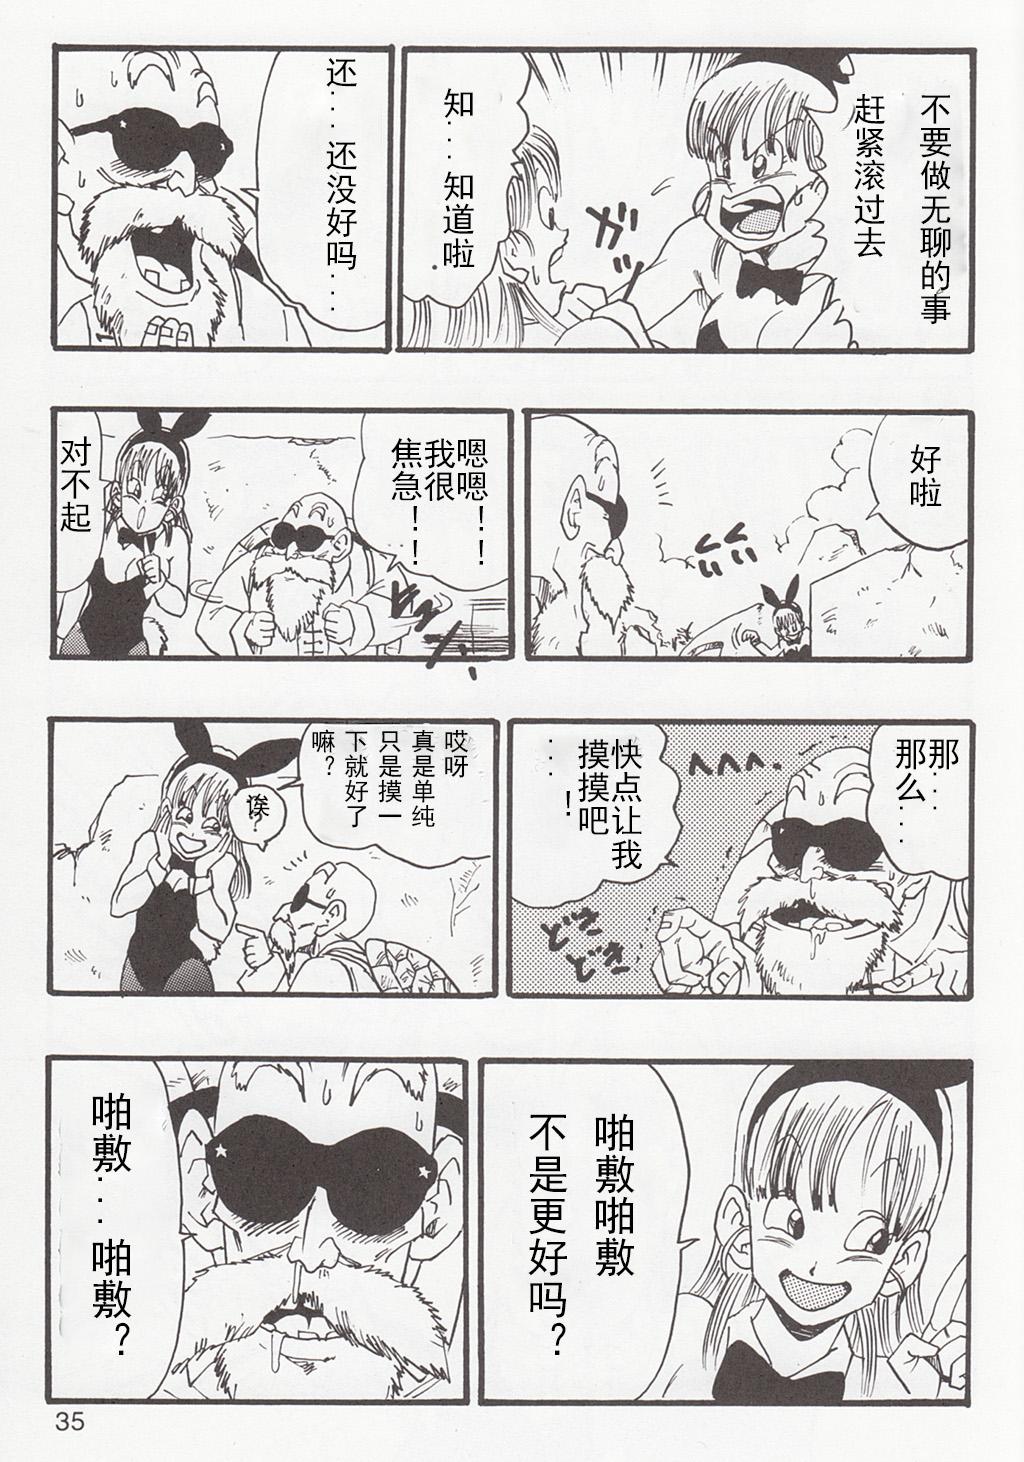 Young Tits Dragon Ball EB 1 - Episode of Bulma - Dragon ball Crazy - Page 4